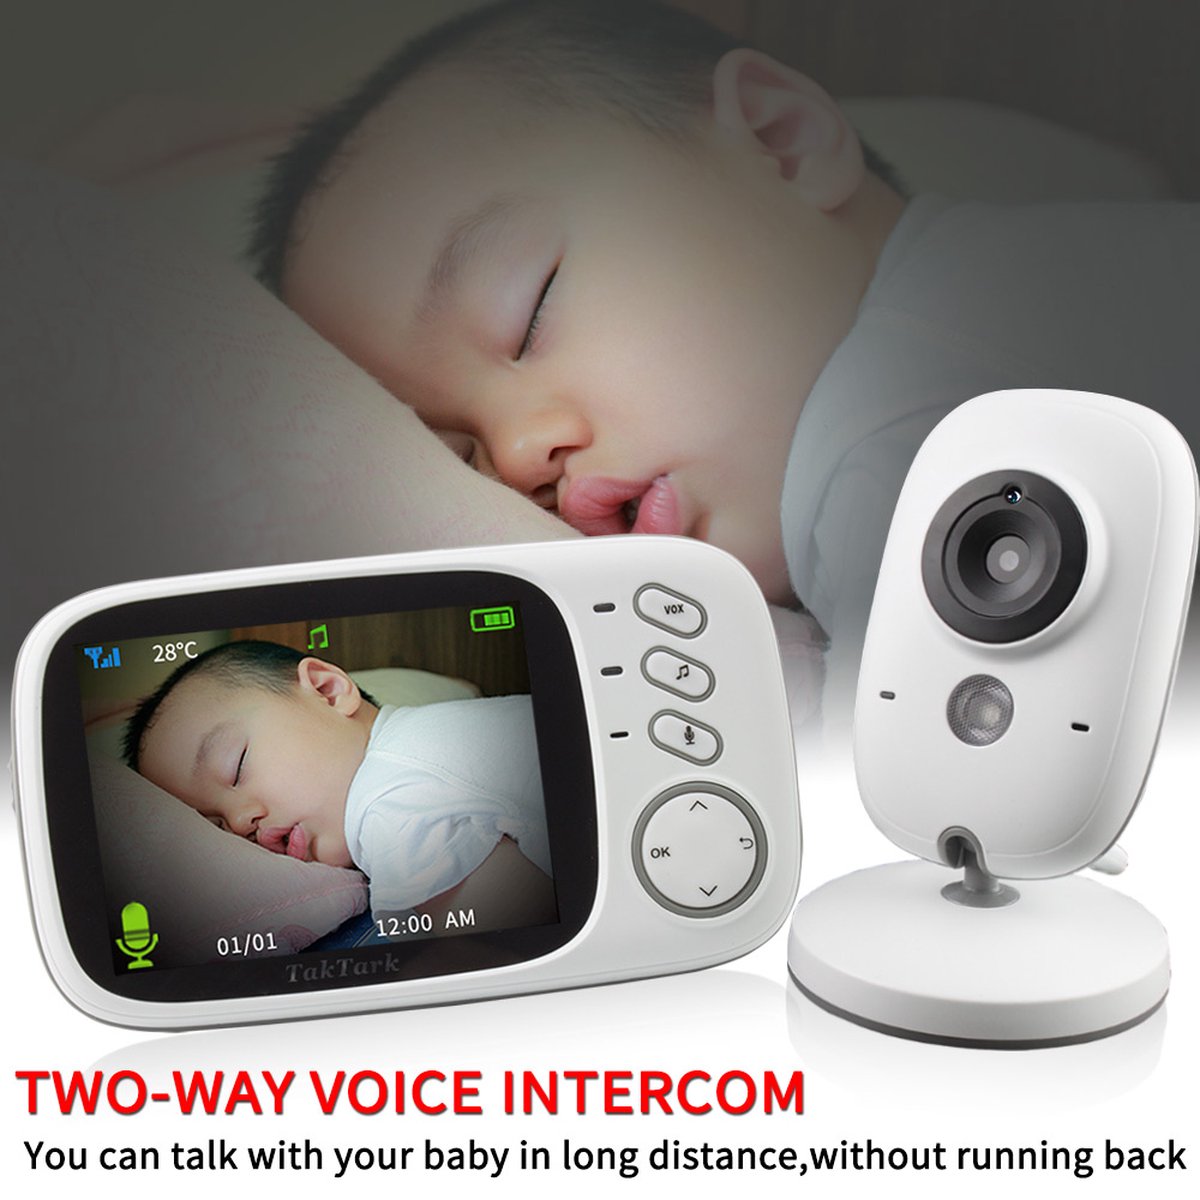 Beveiligingscamera-3,2 inch draadloze video-kleurenbabyfoon - nachtzichttemperatuurbewaking